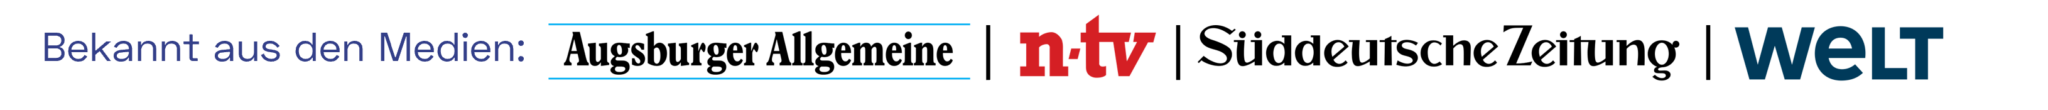 cheapenergy24_Bekannt_aus_den_Medien_logo